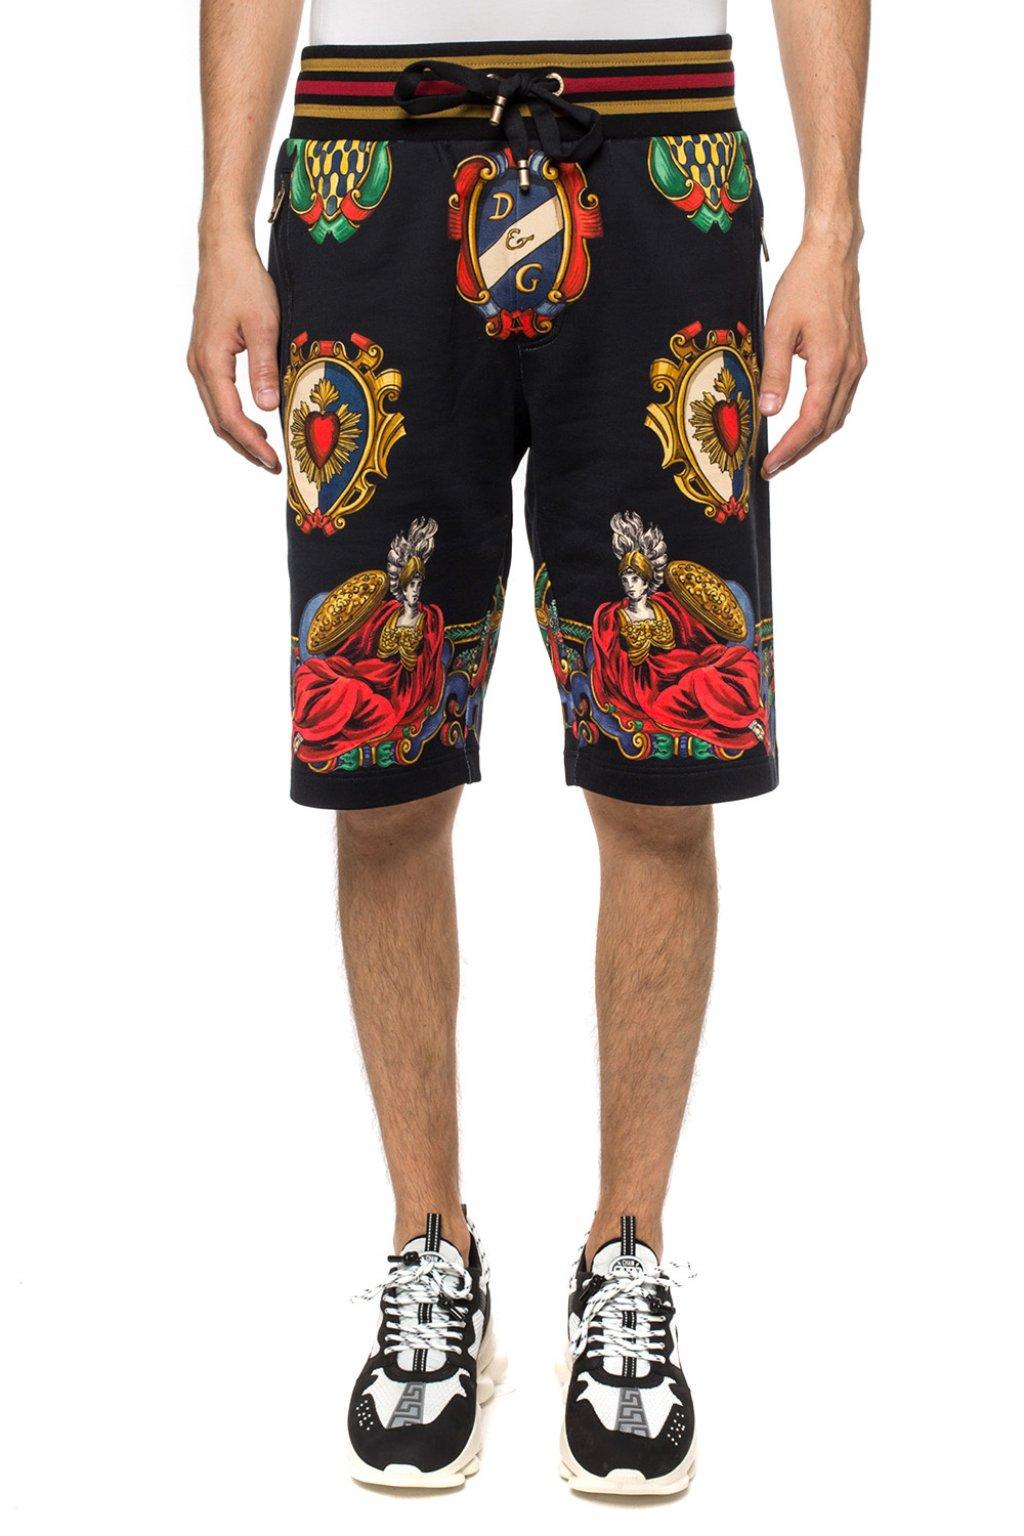 Dolce & Gabbana Cotton Heraldic Print Shorts in Black,Red,Yellow (Black ...